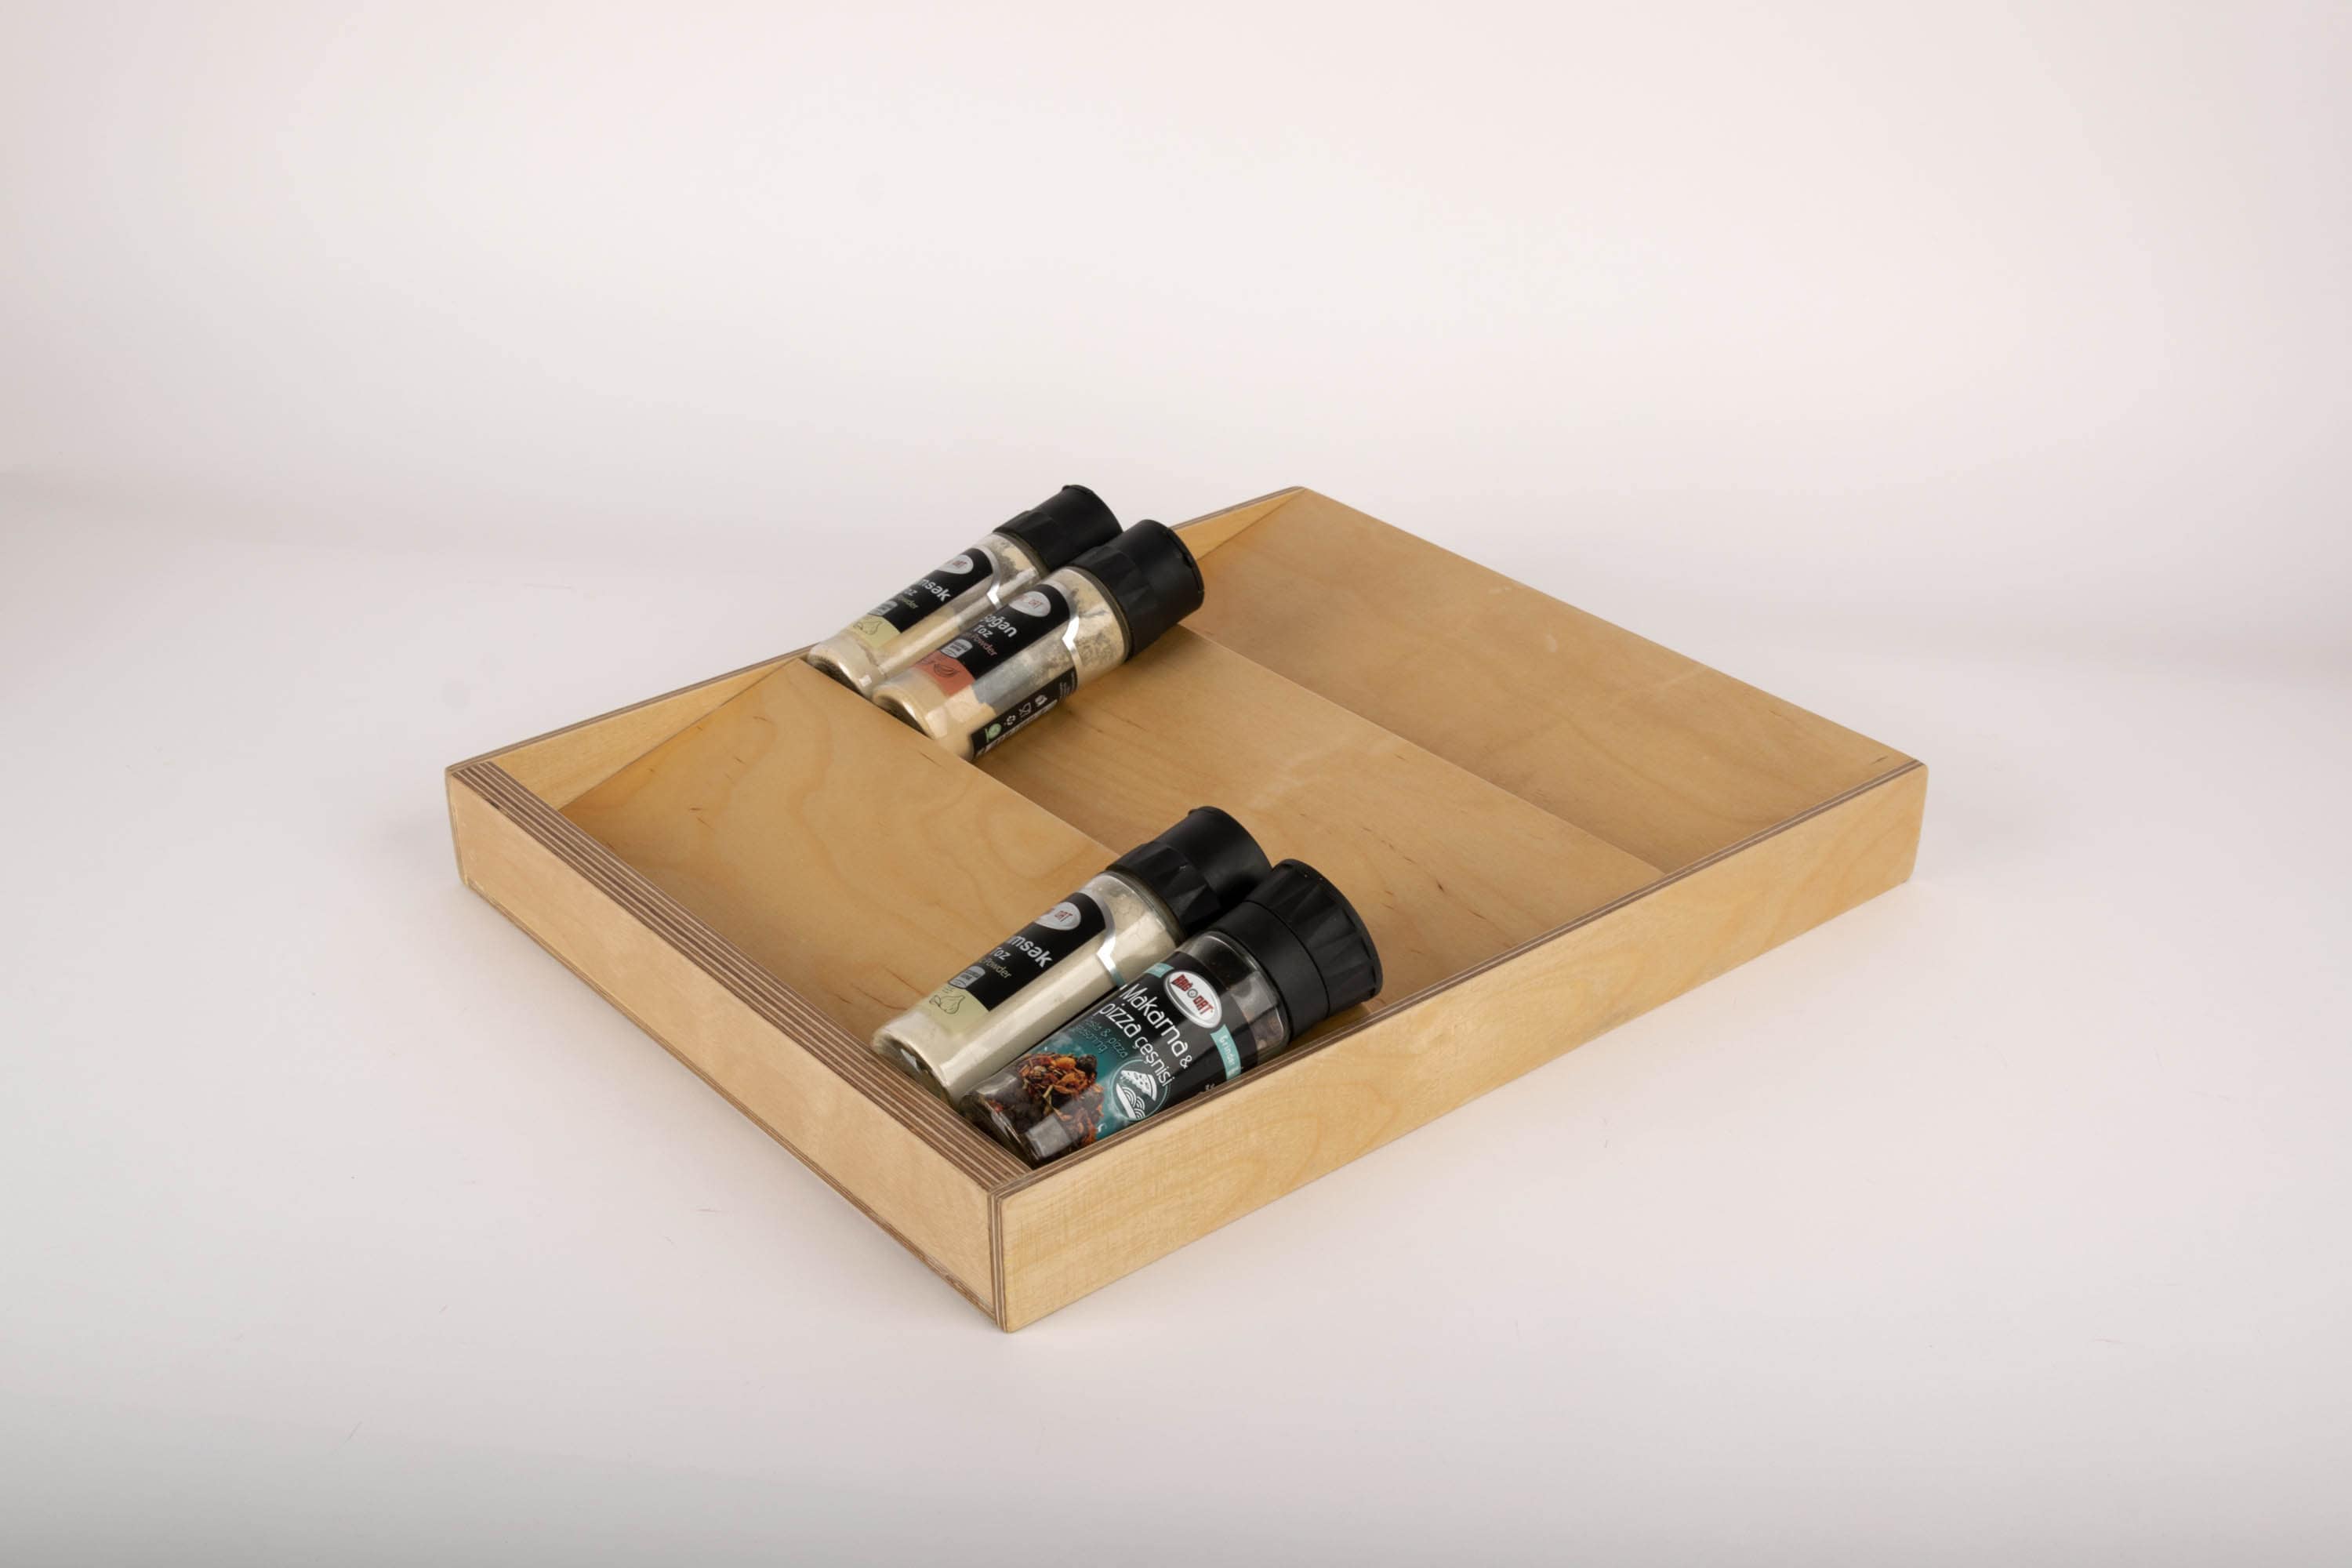 Custom Spice Jar Drawer Organizer (Vertical/Standing Jars) – Mighty Tidy  Organizers